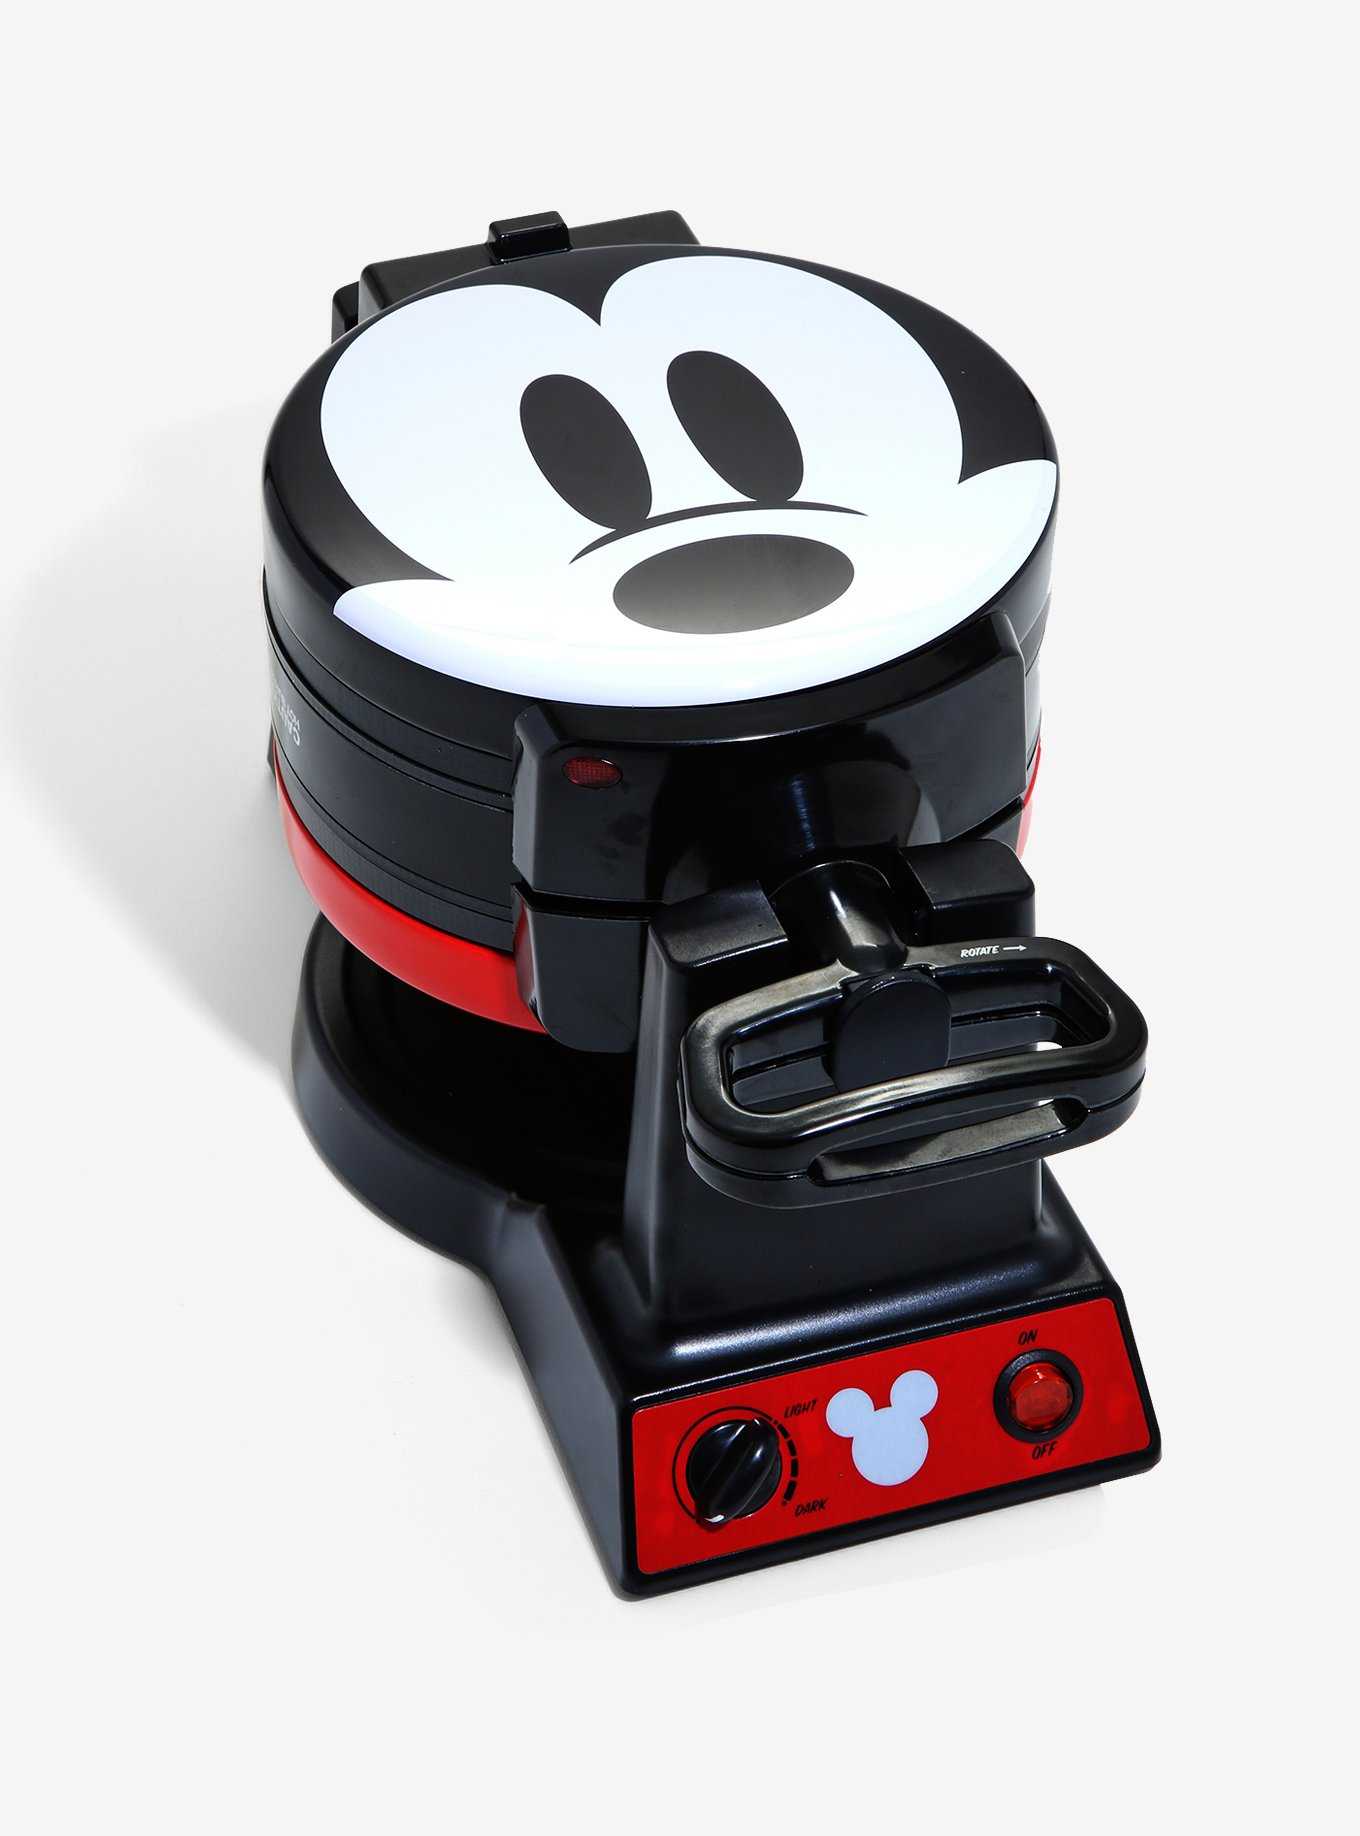 Unique Kitchen Appliances: Disney Waffle Makers, Toasters & More